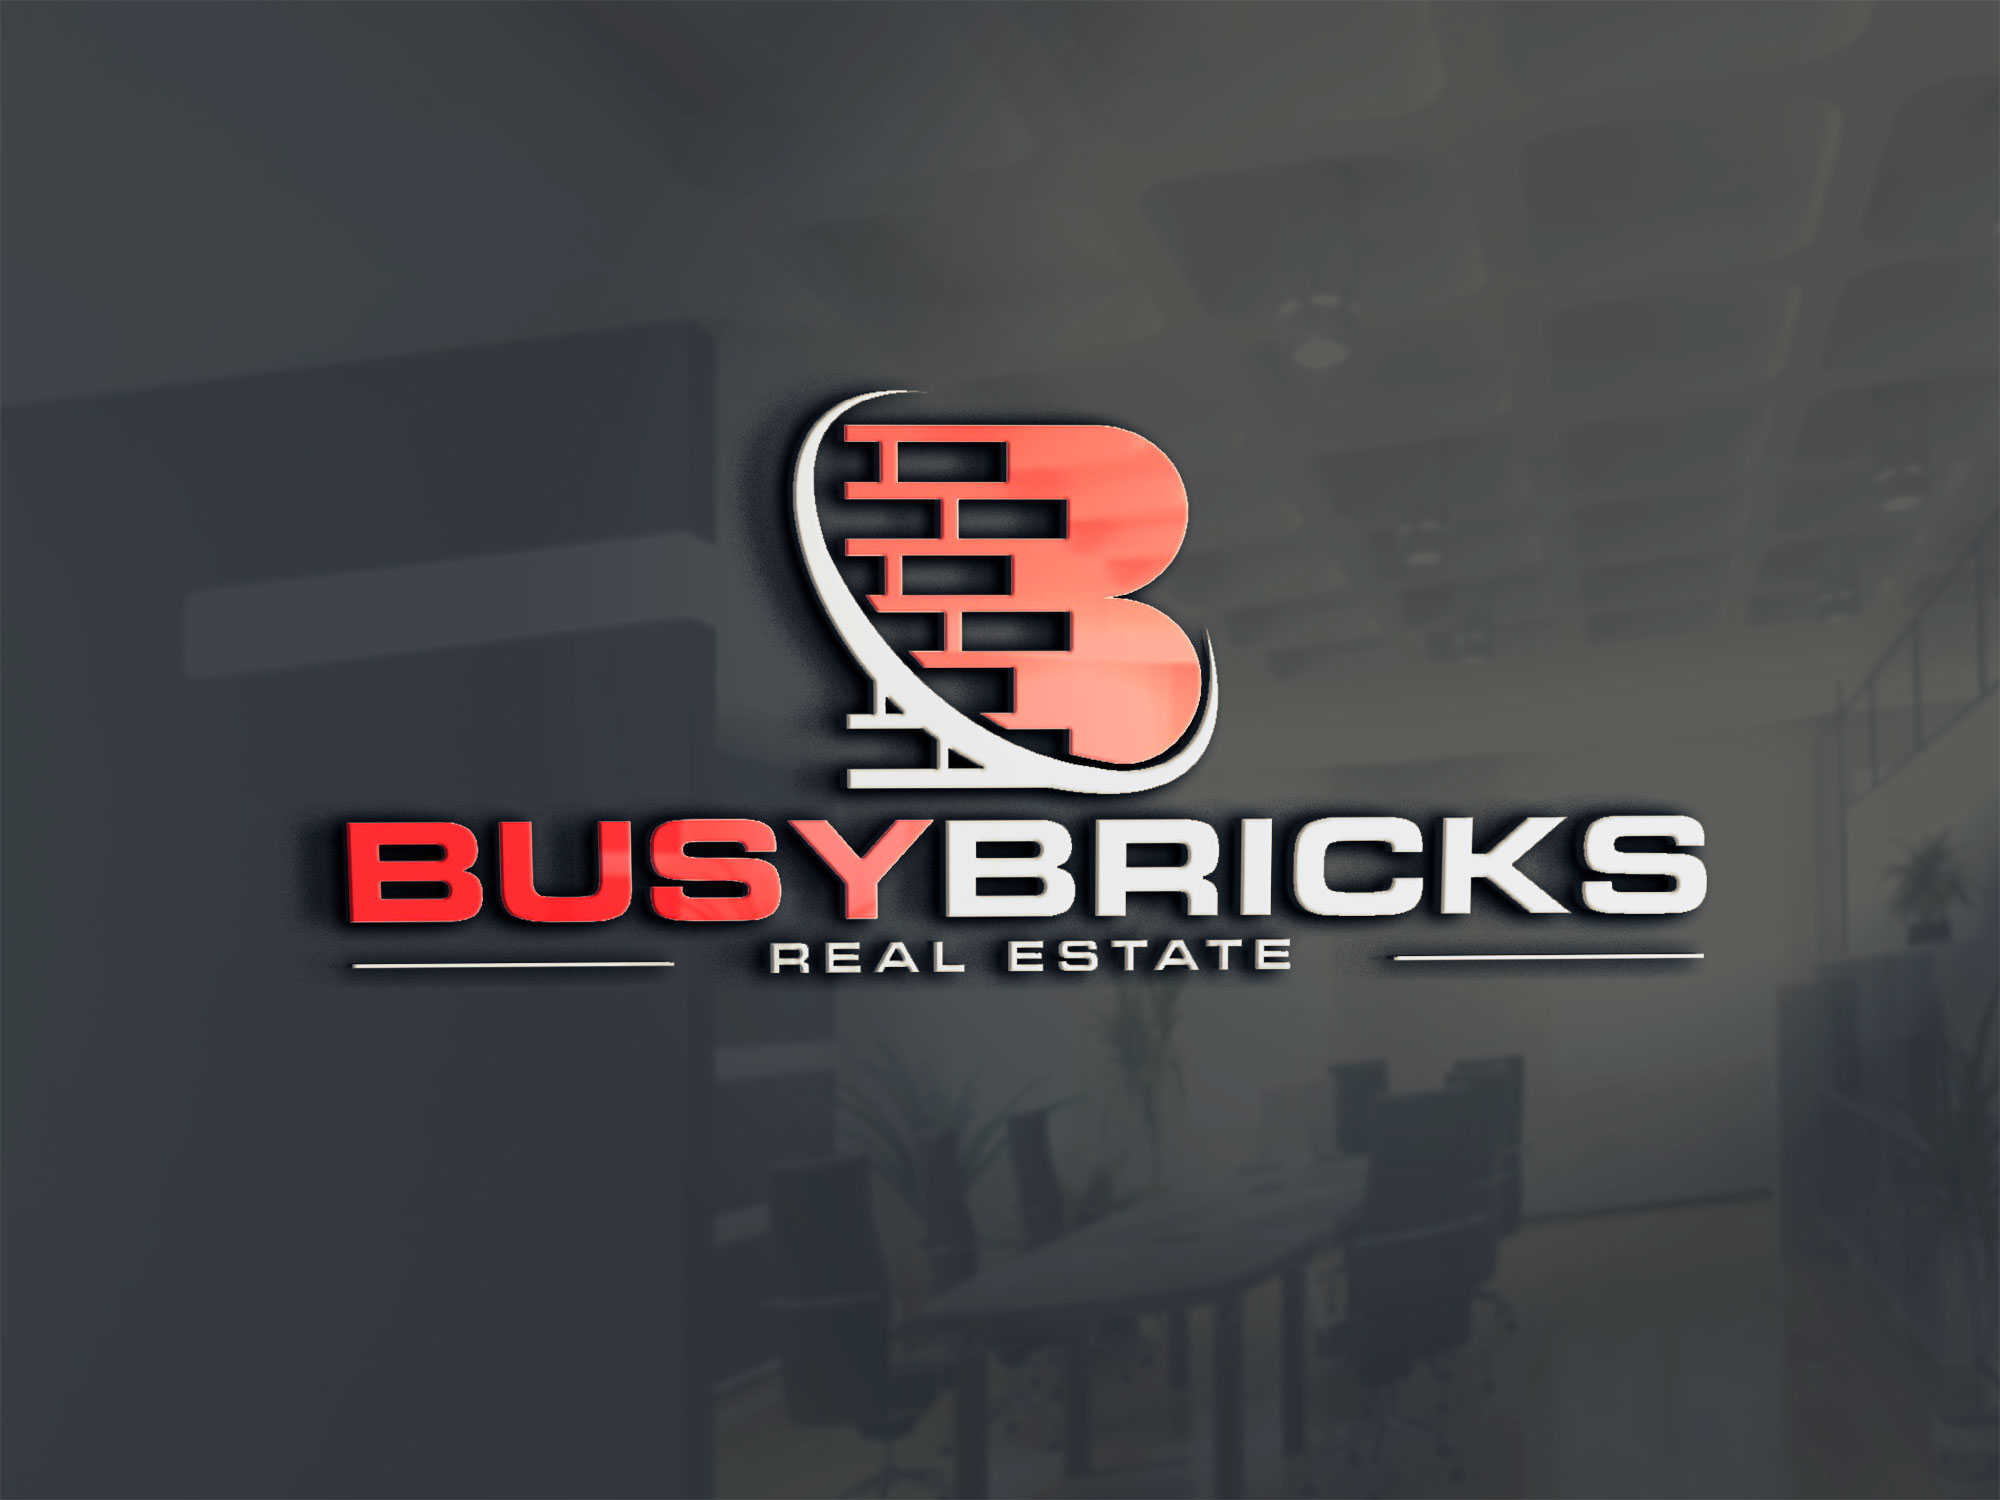 Busy Bricks Real Estate